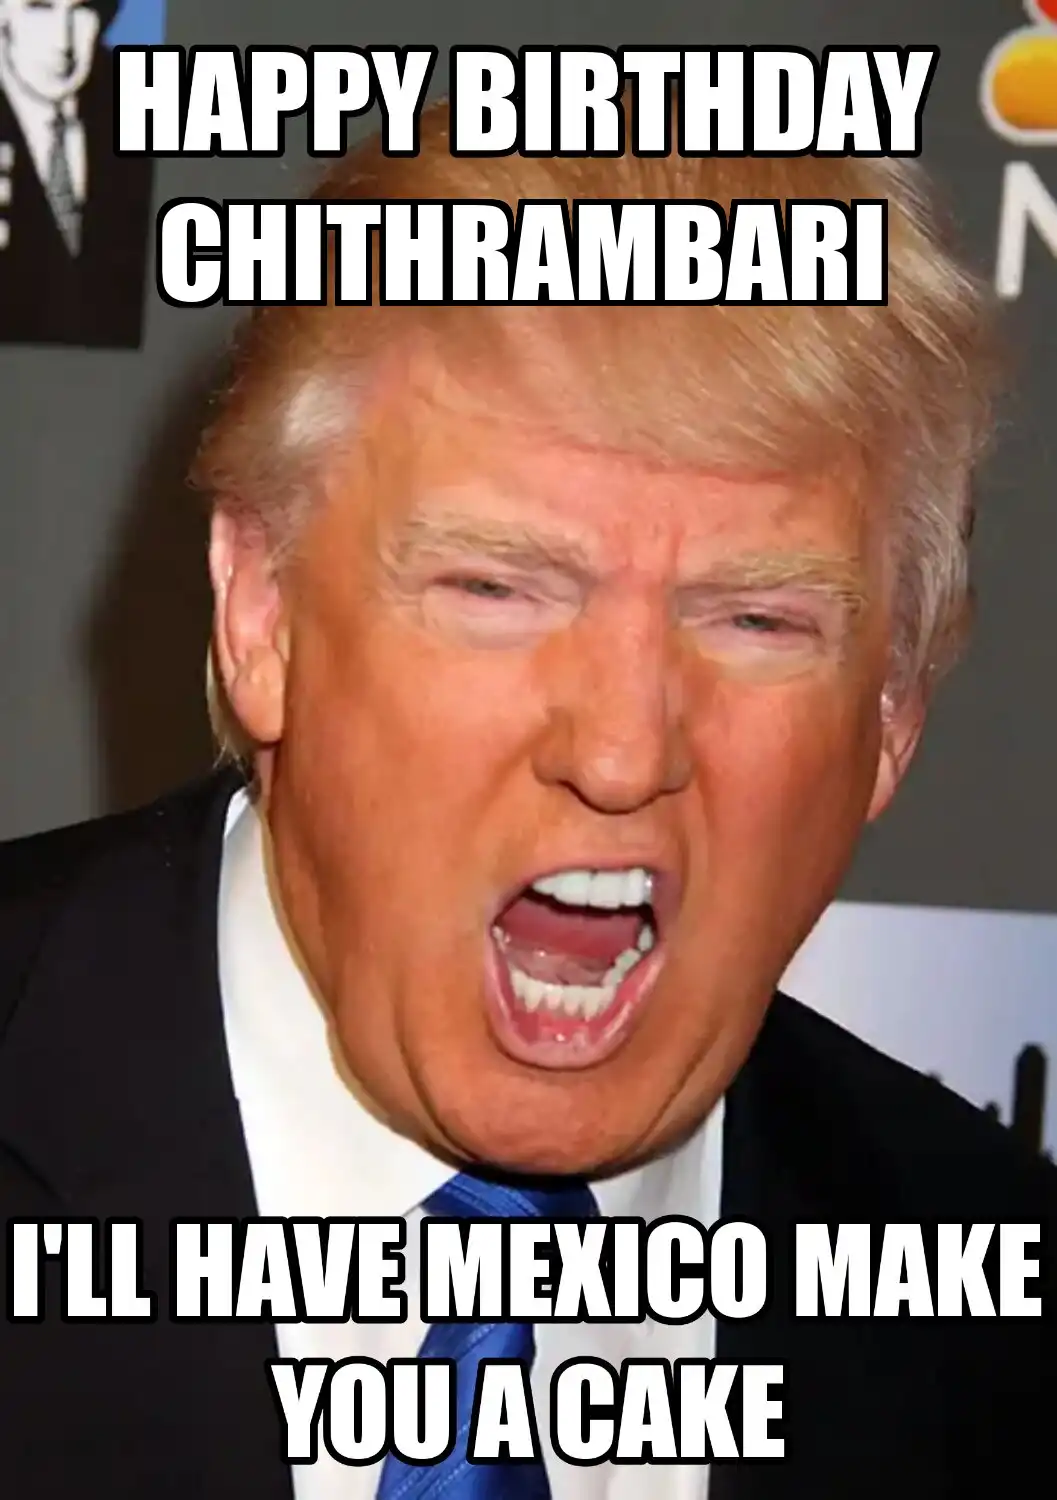 Happy Birthday Chithrambari Mexico Make You A Cake Meme